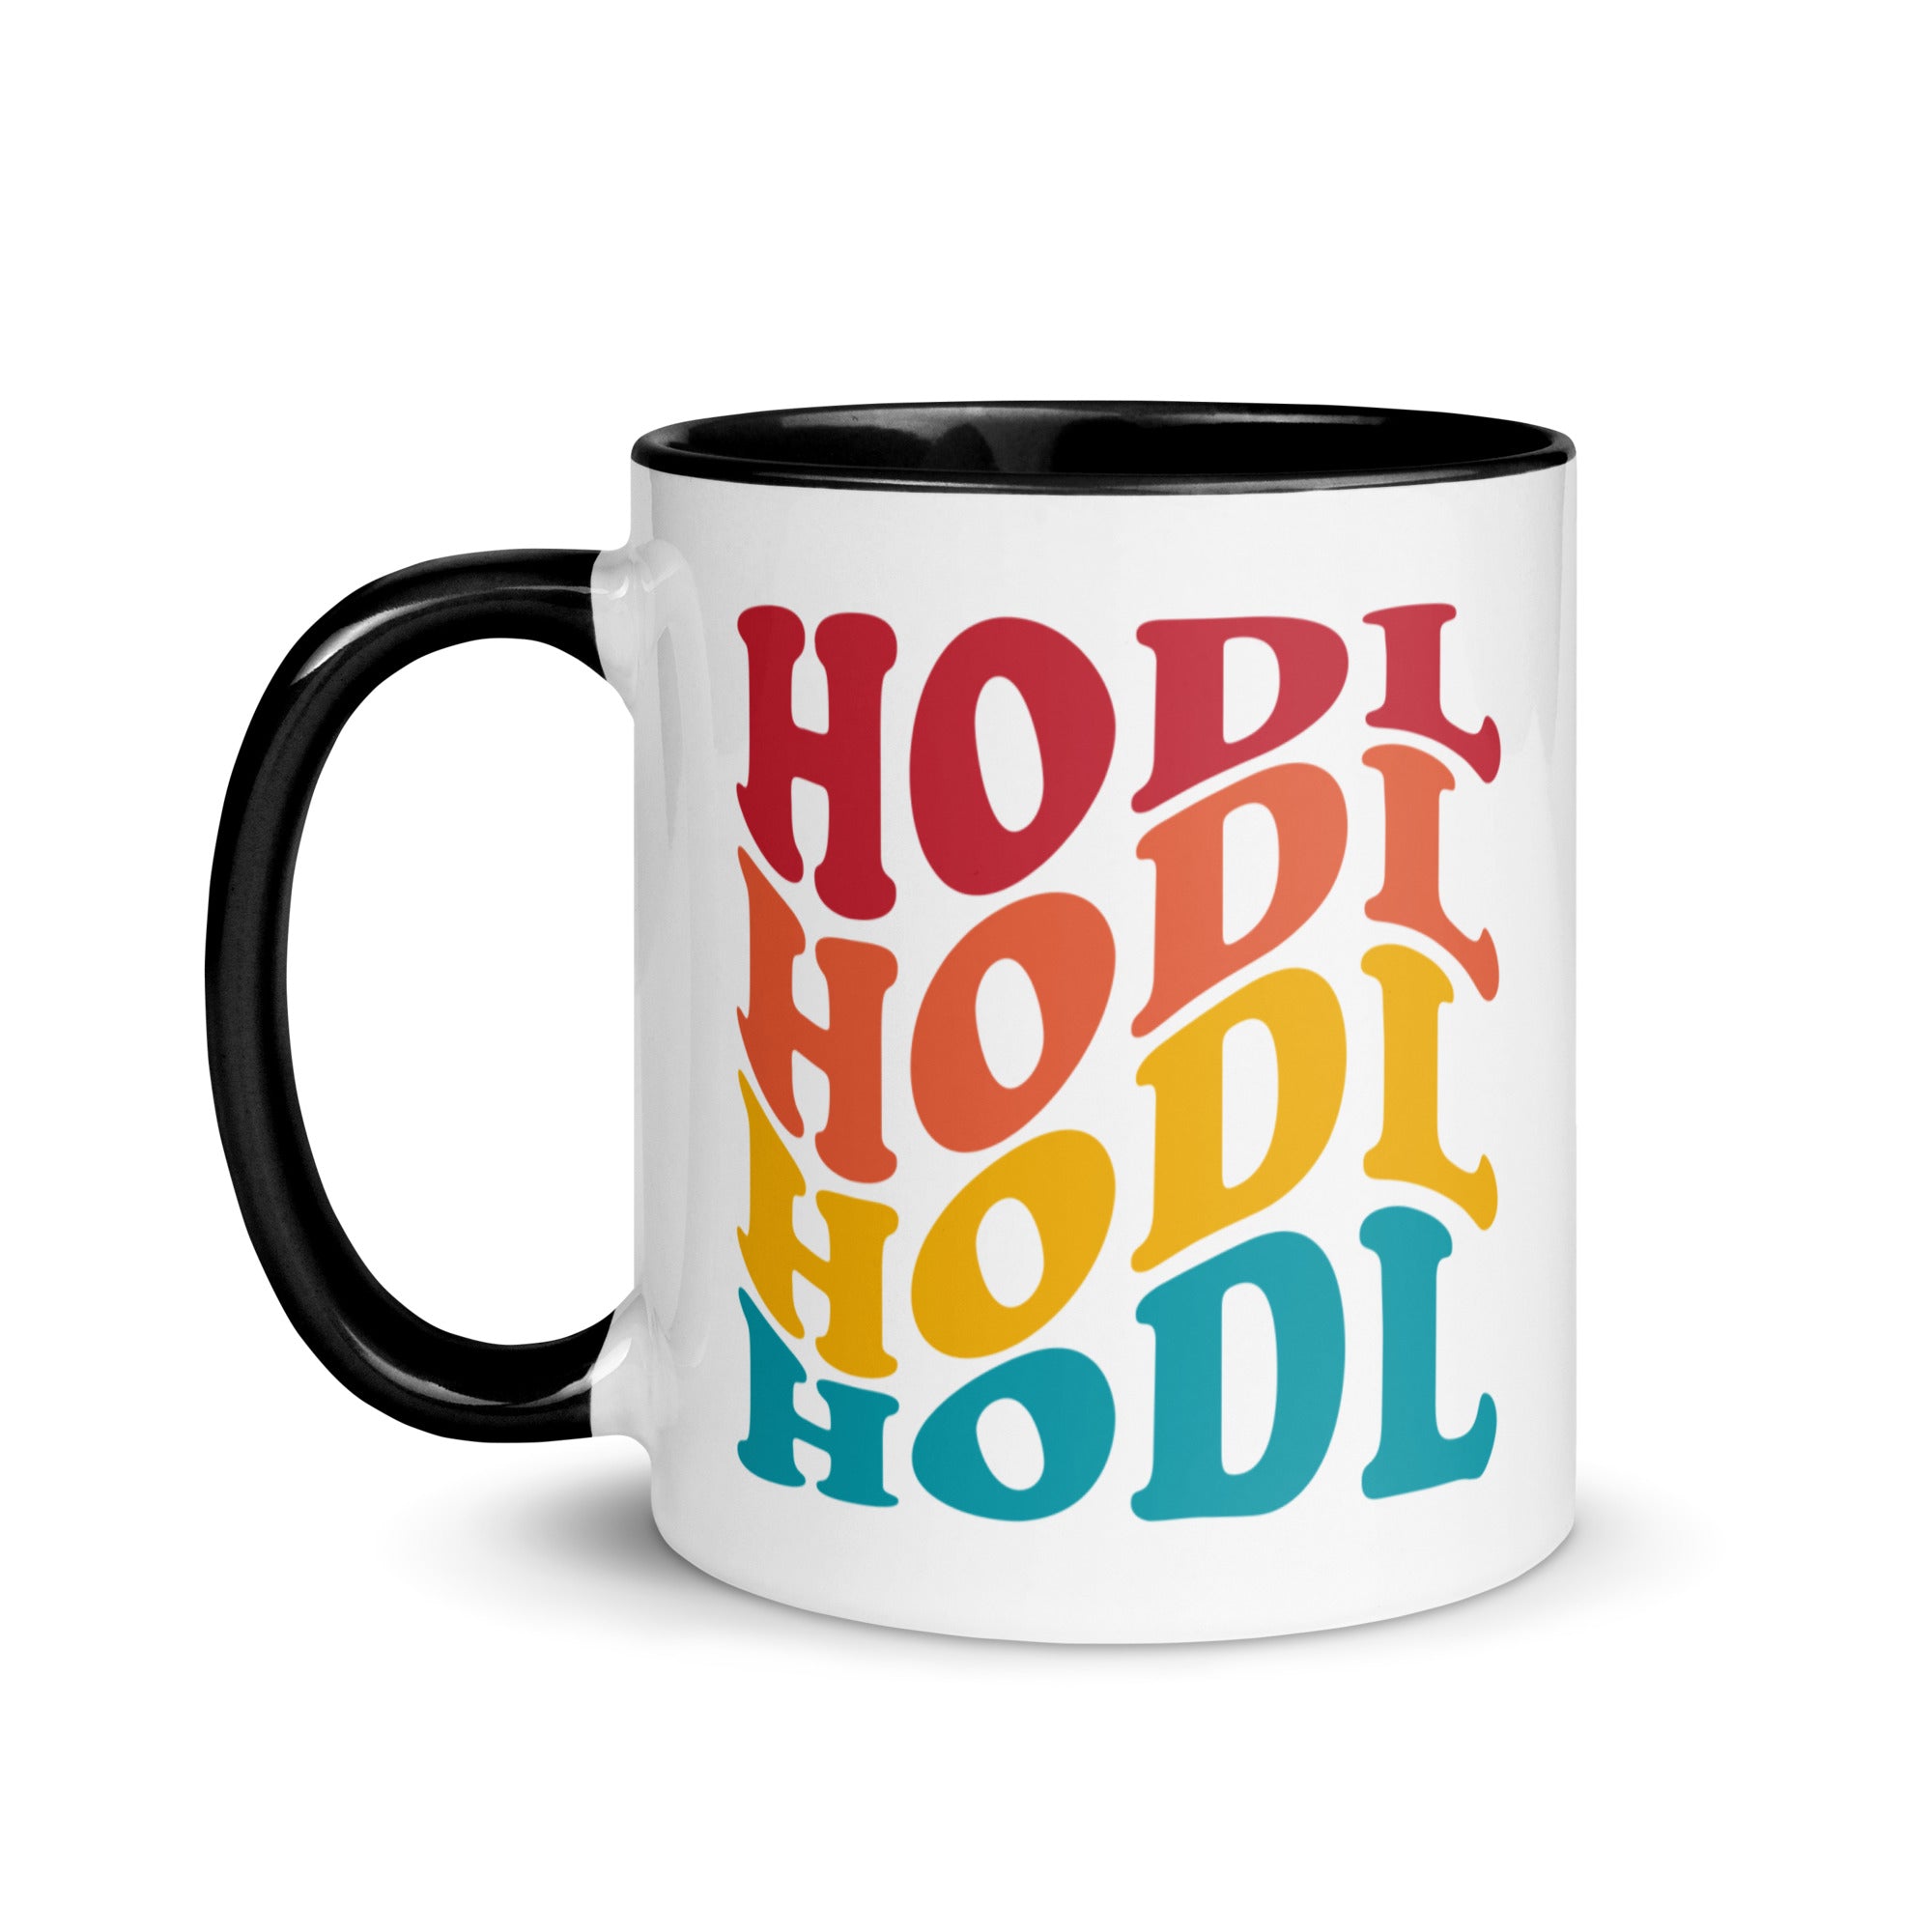 Crypto Mugs - HODL Mug. Left handle view.